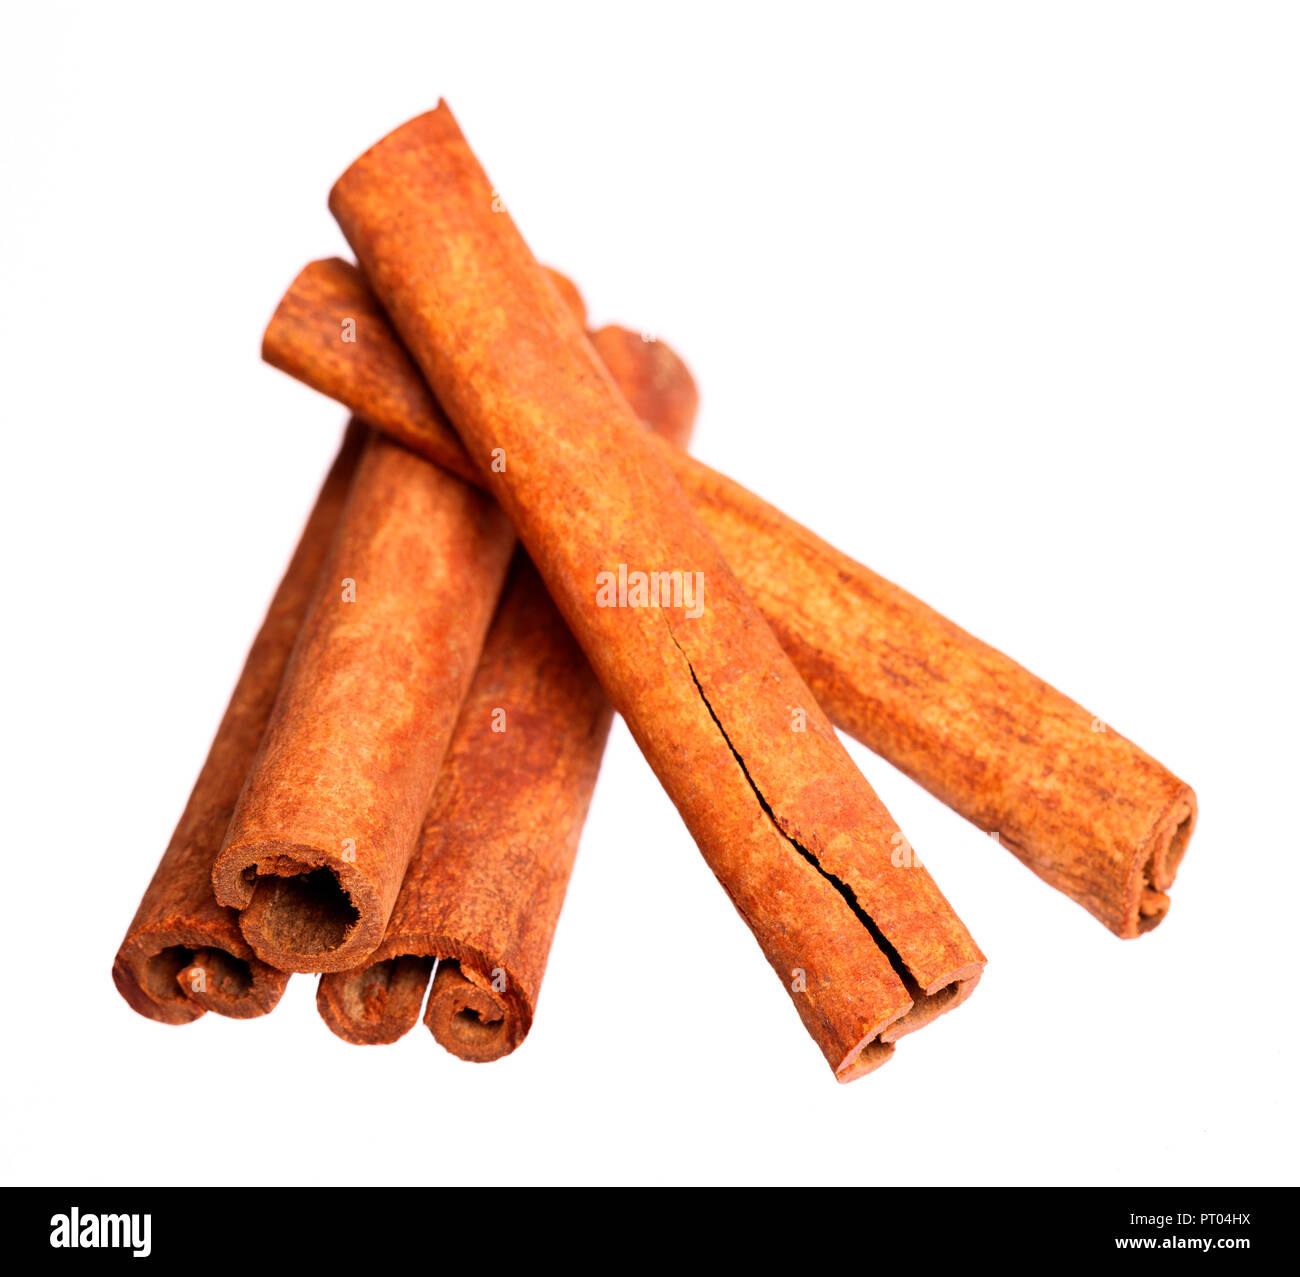 Cinnamon sticks isolated on white background. High resolution photo. Stock Photo